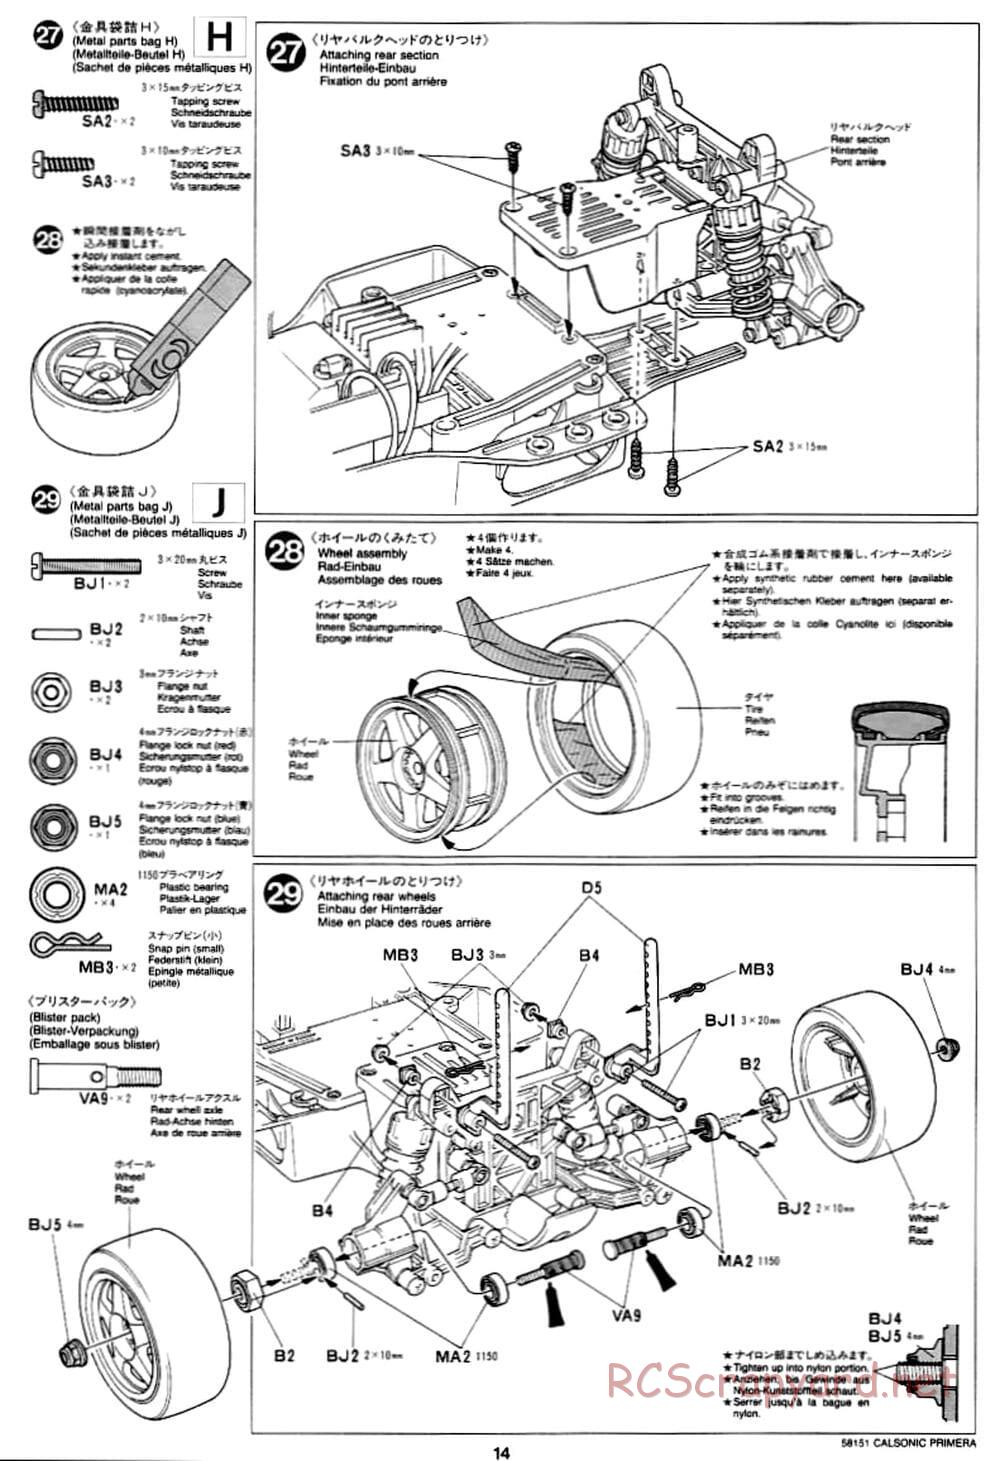 Tamiya - Calsonic Nissan Primera JTCC - FF-01 Chassis - Manual - Page 14